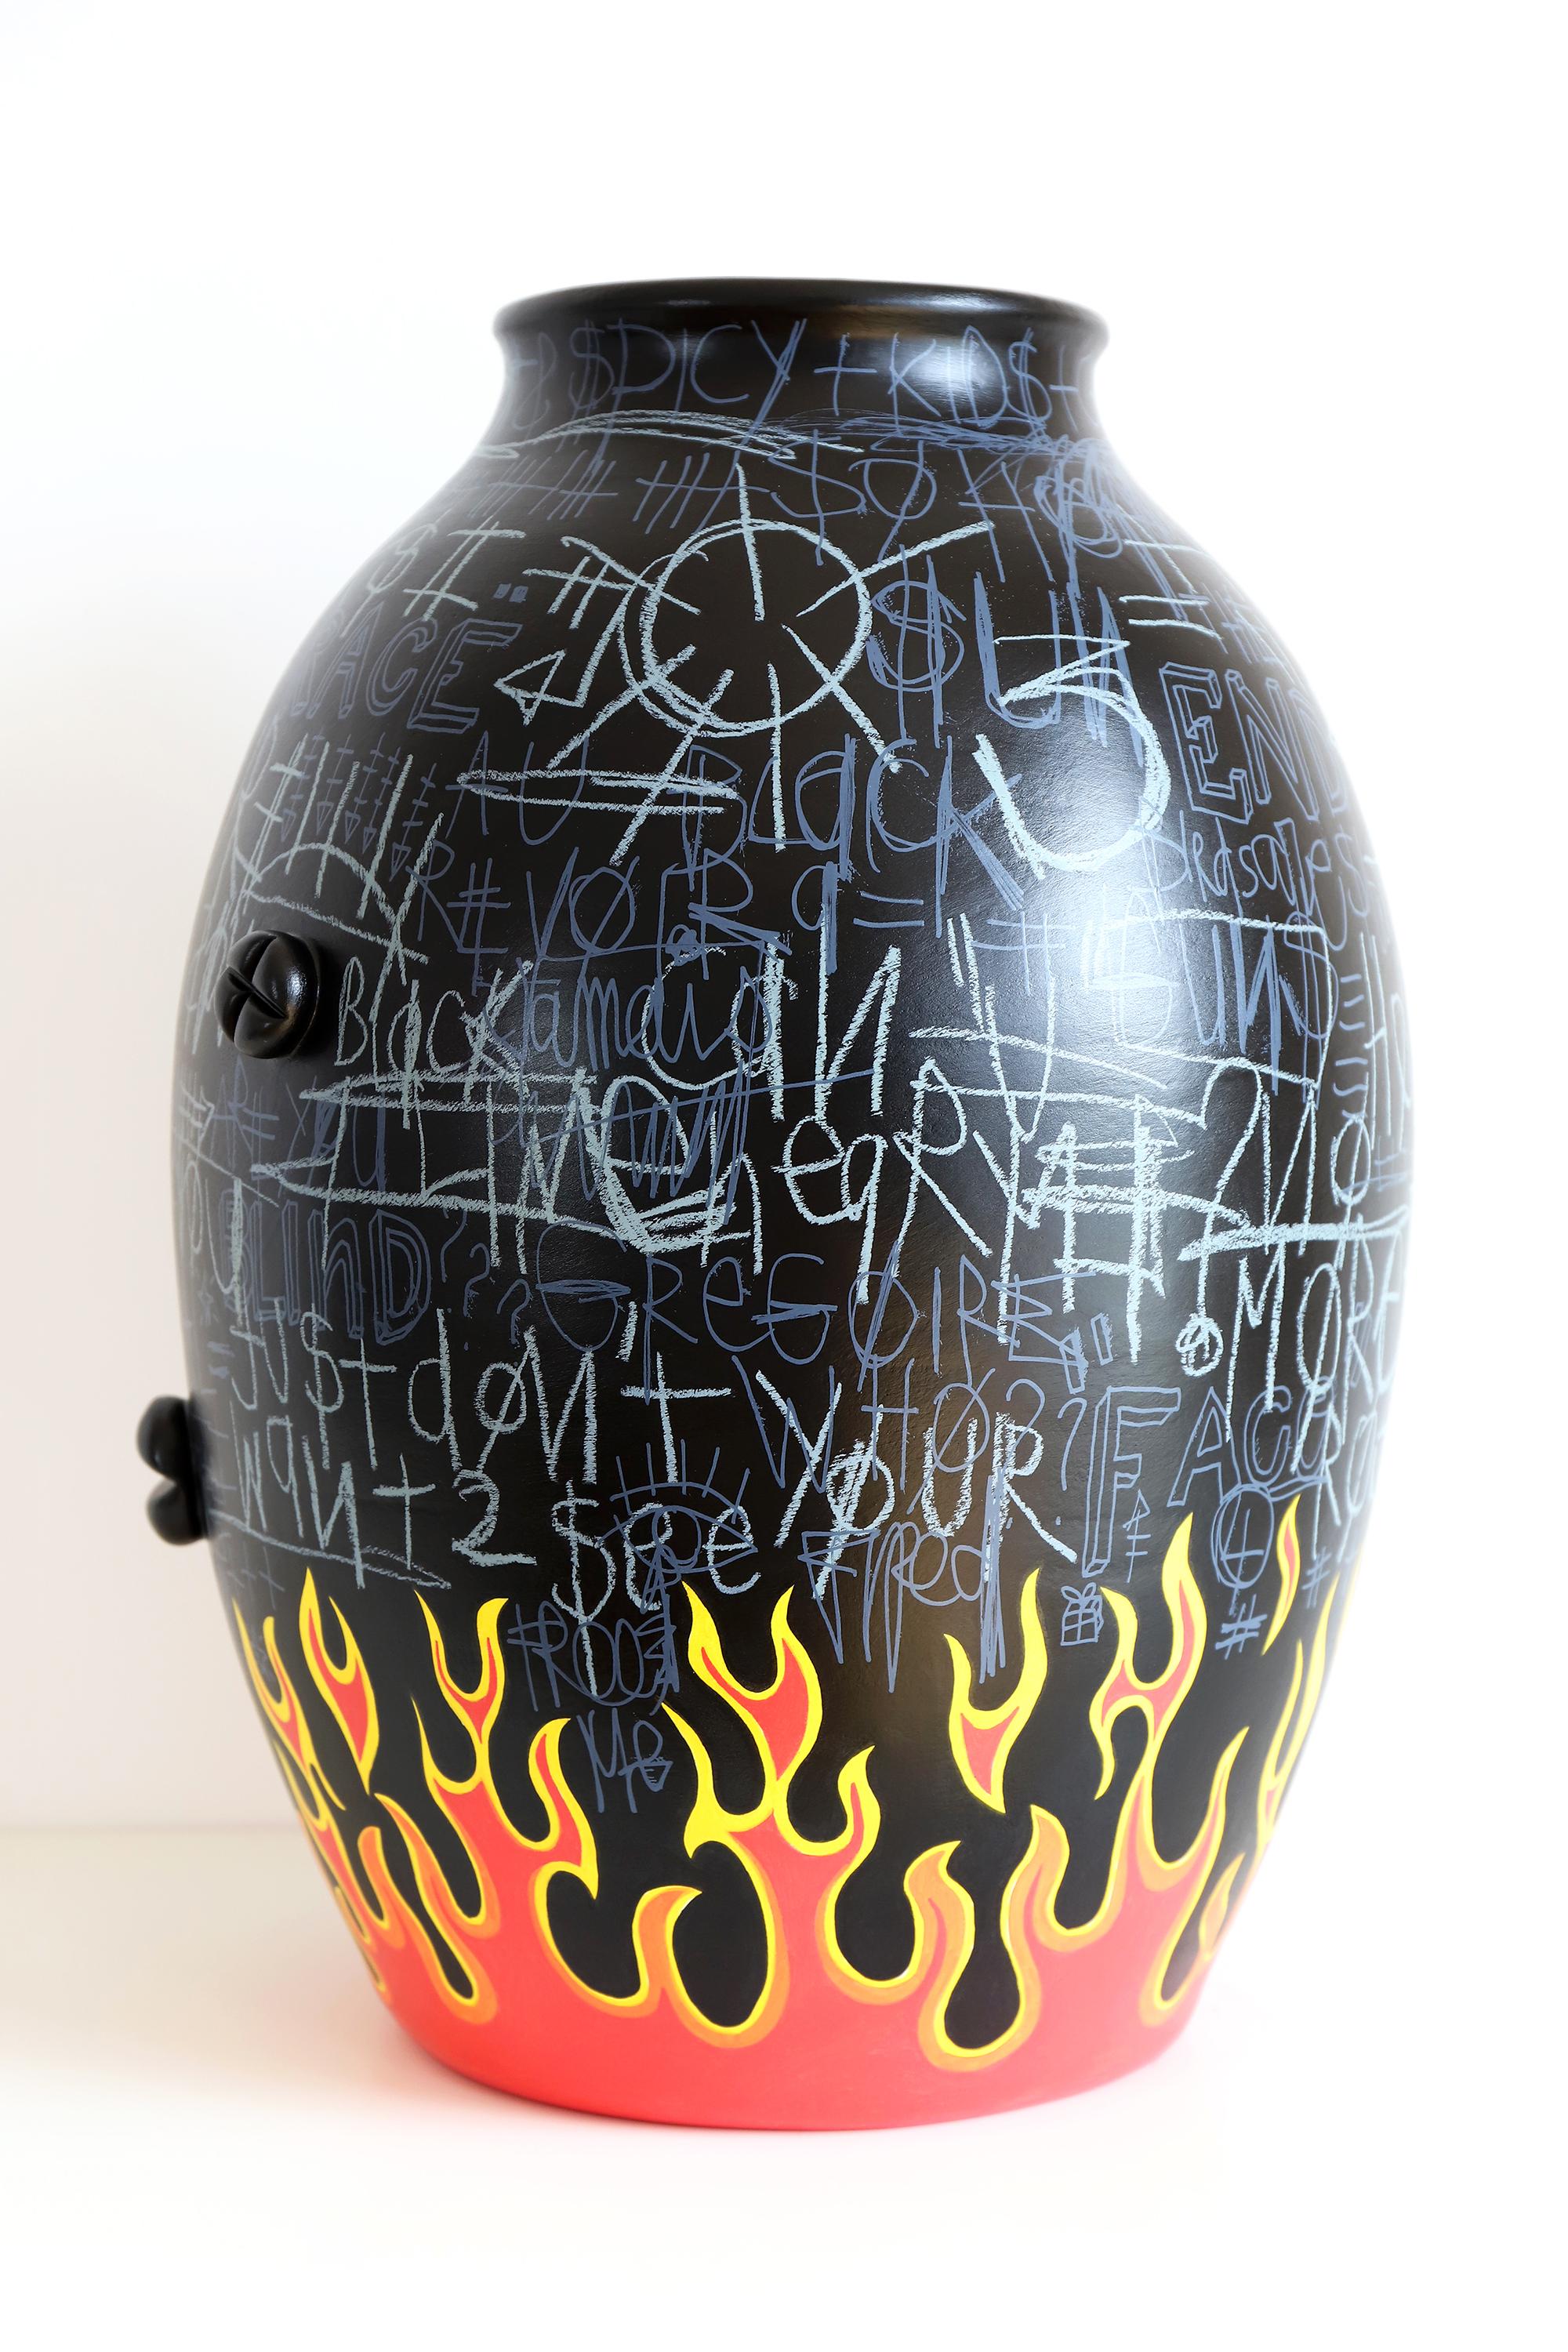 Burn Hollywood Burn - Contemporary Sculpture by Grégoire Devin